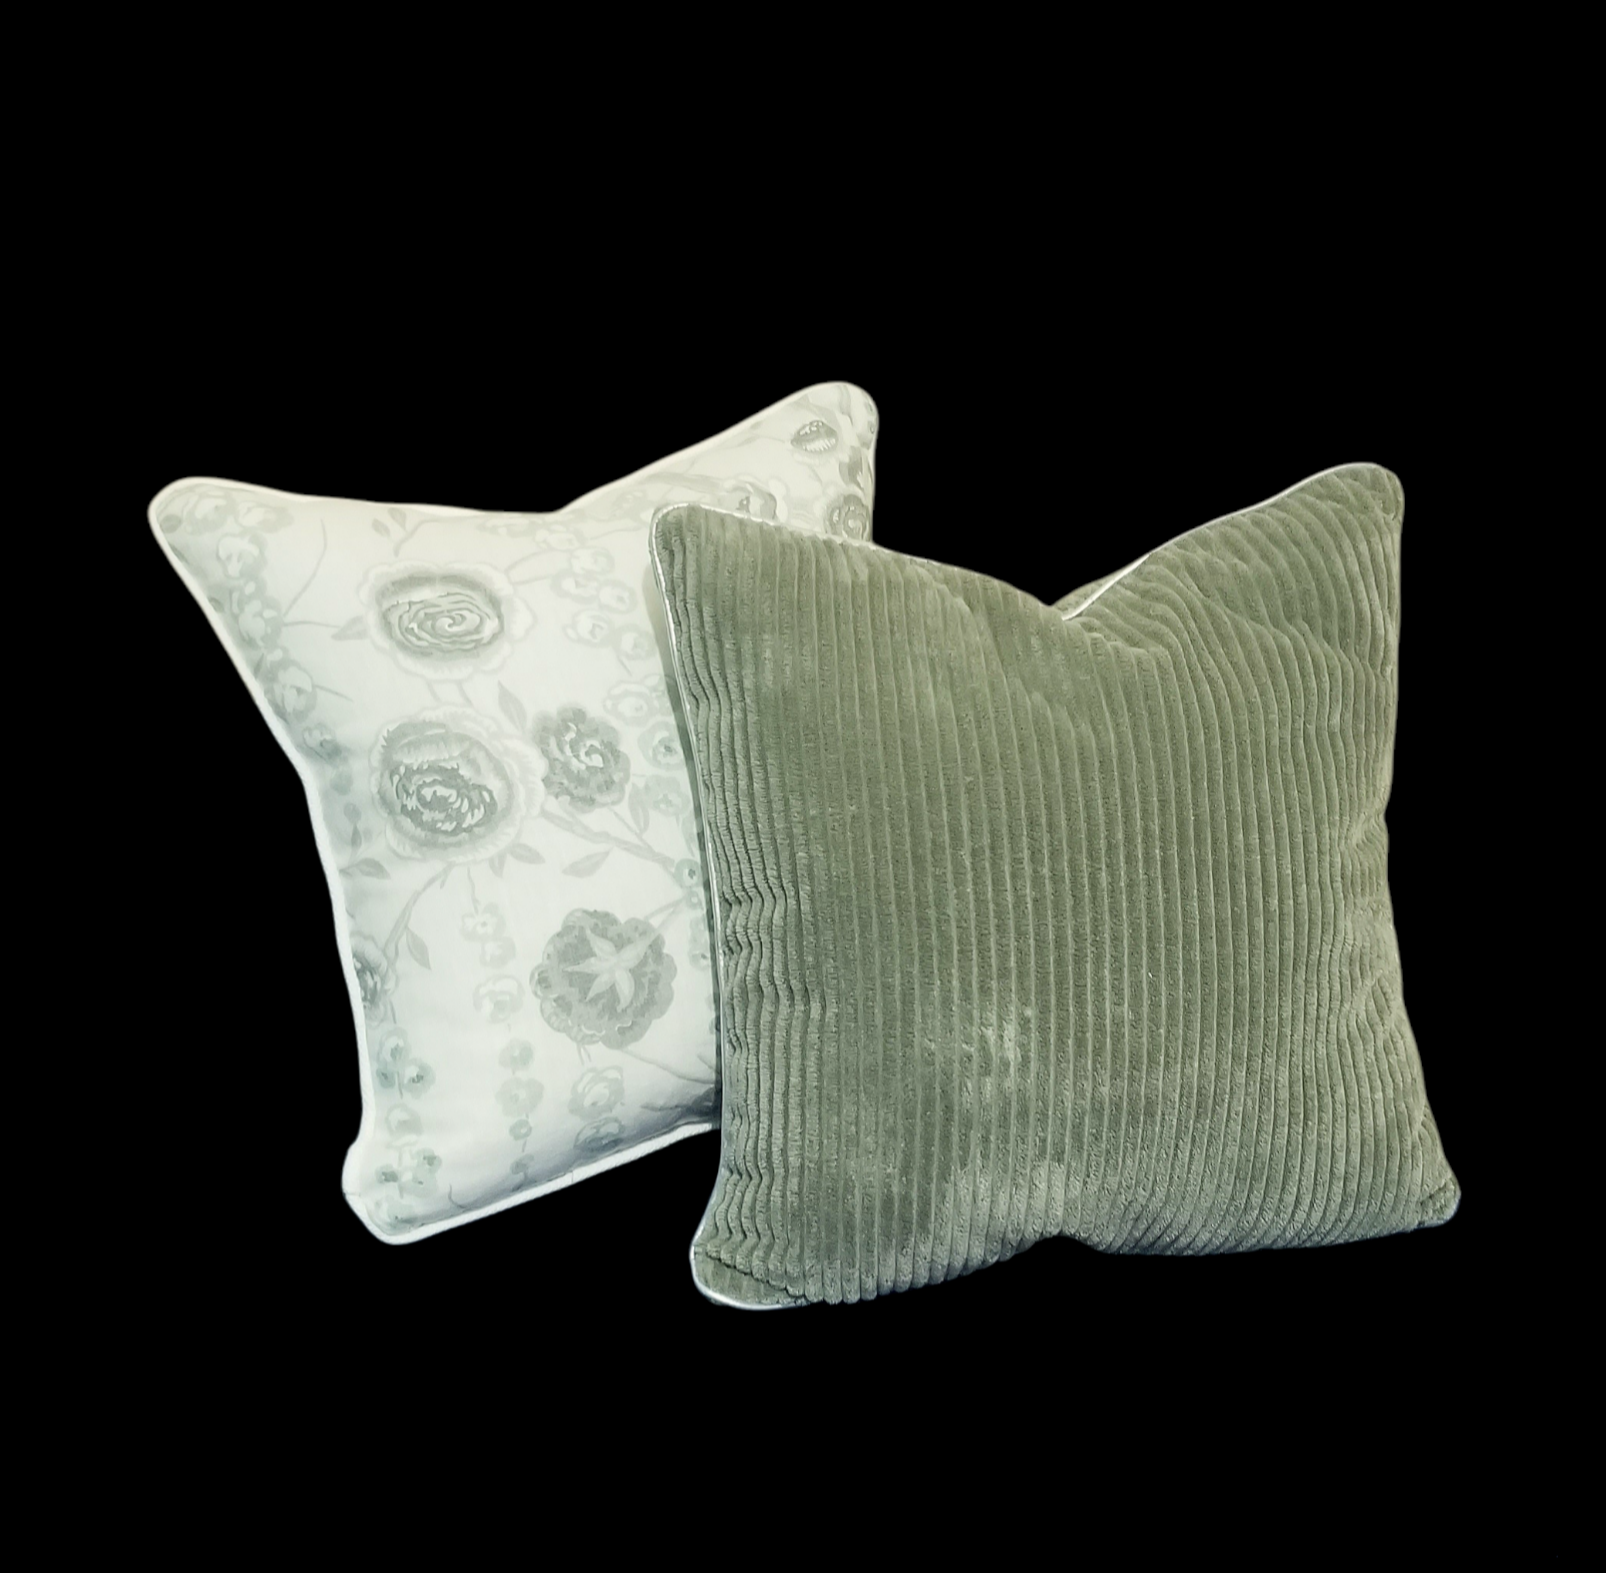 Luxury Grey and Silver Decorative Pillow - Advenique Home Decor